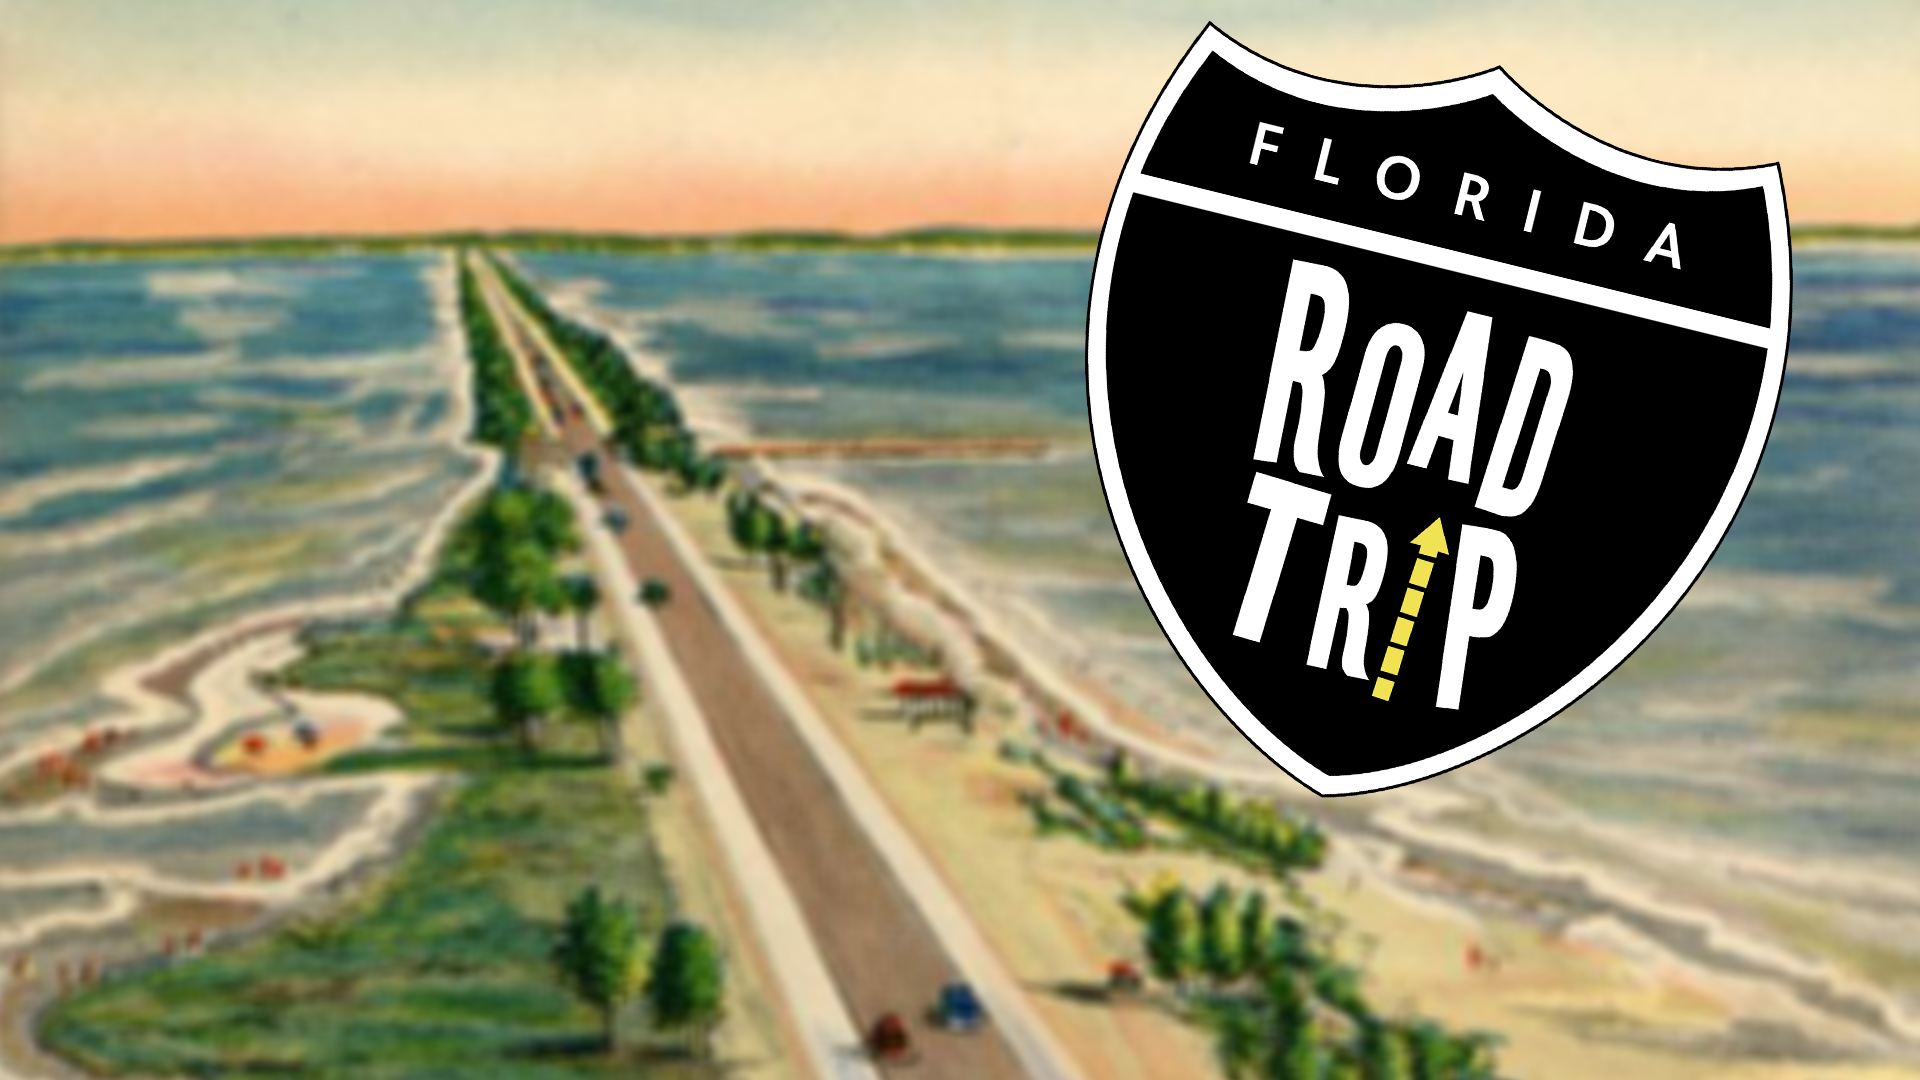 Florida Road Trip premieres Sept. 15